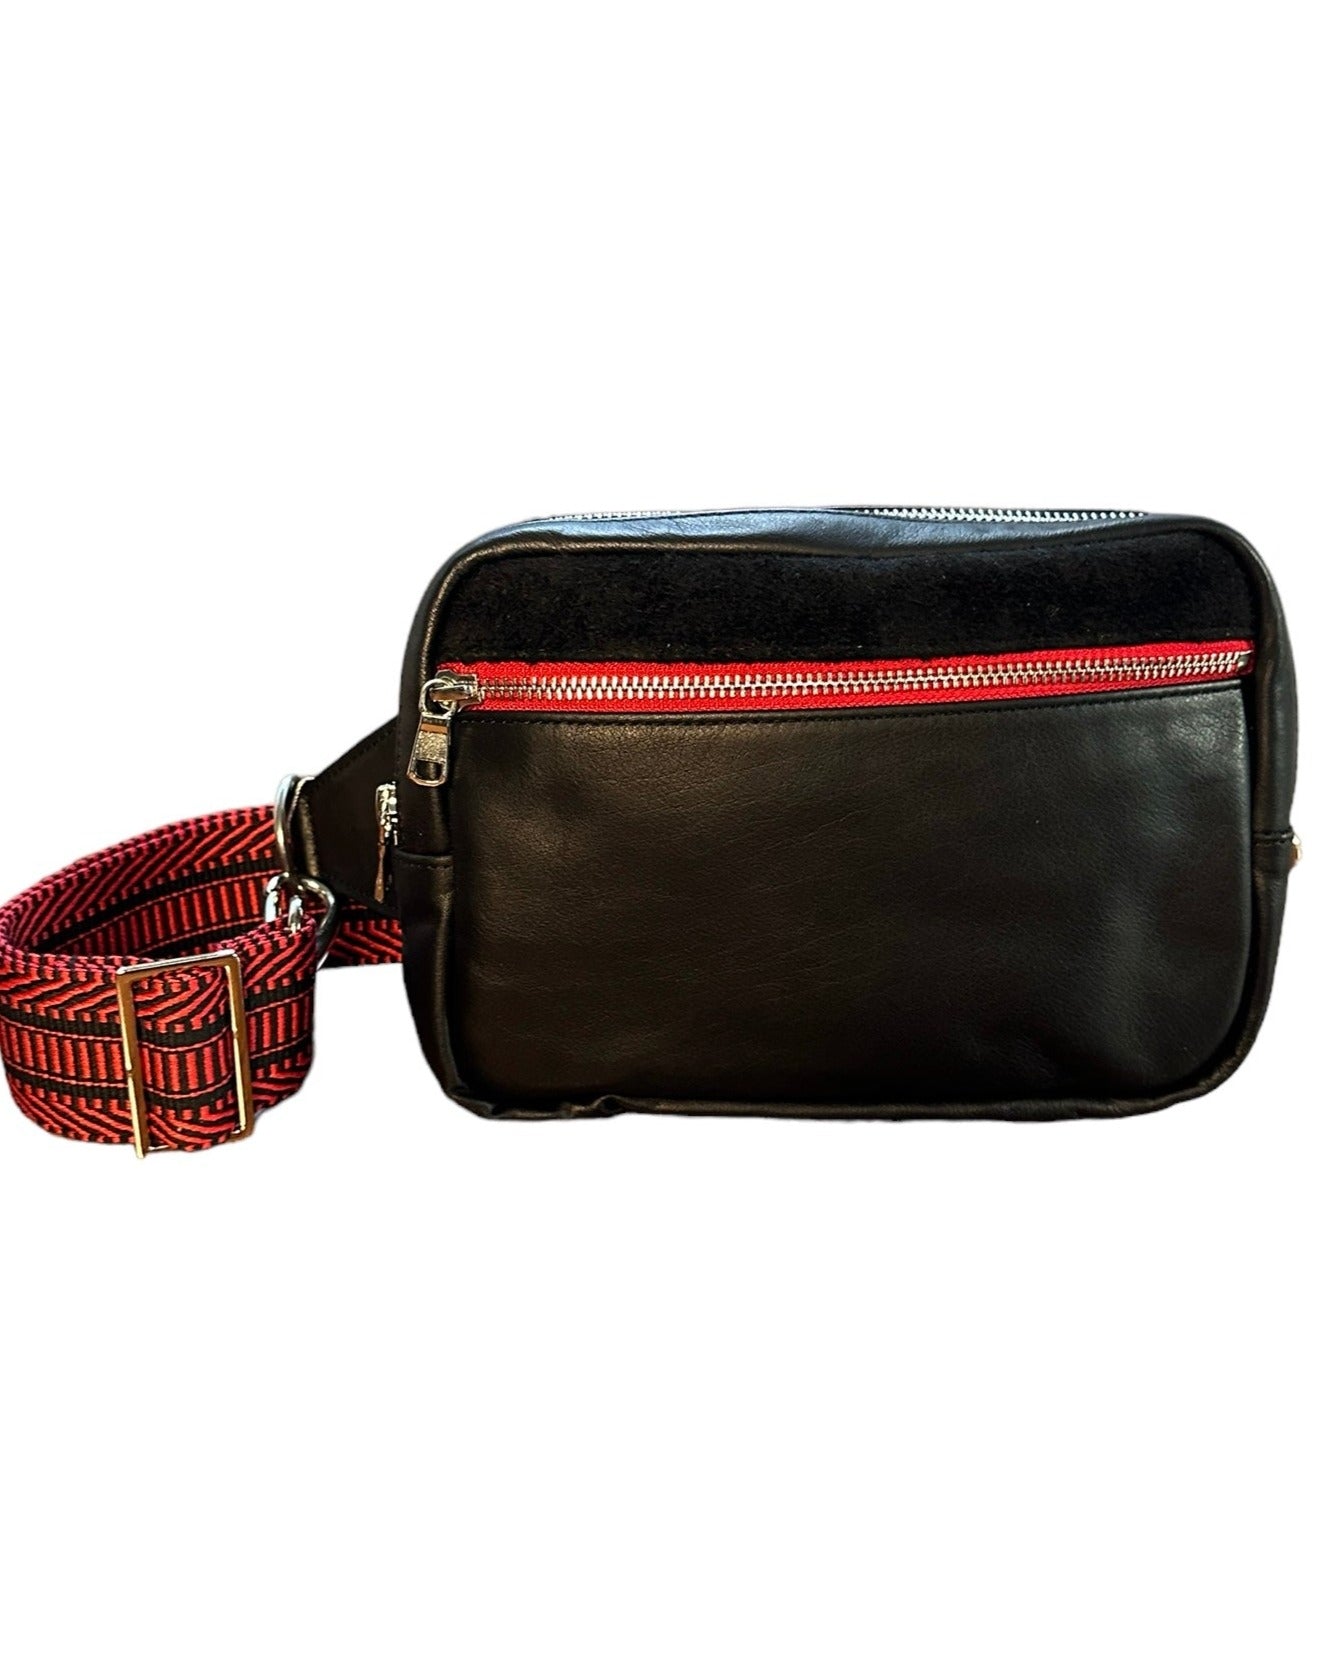 Black leather unisex sling, the ultimate travel bag. 